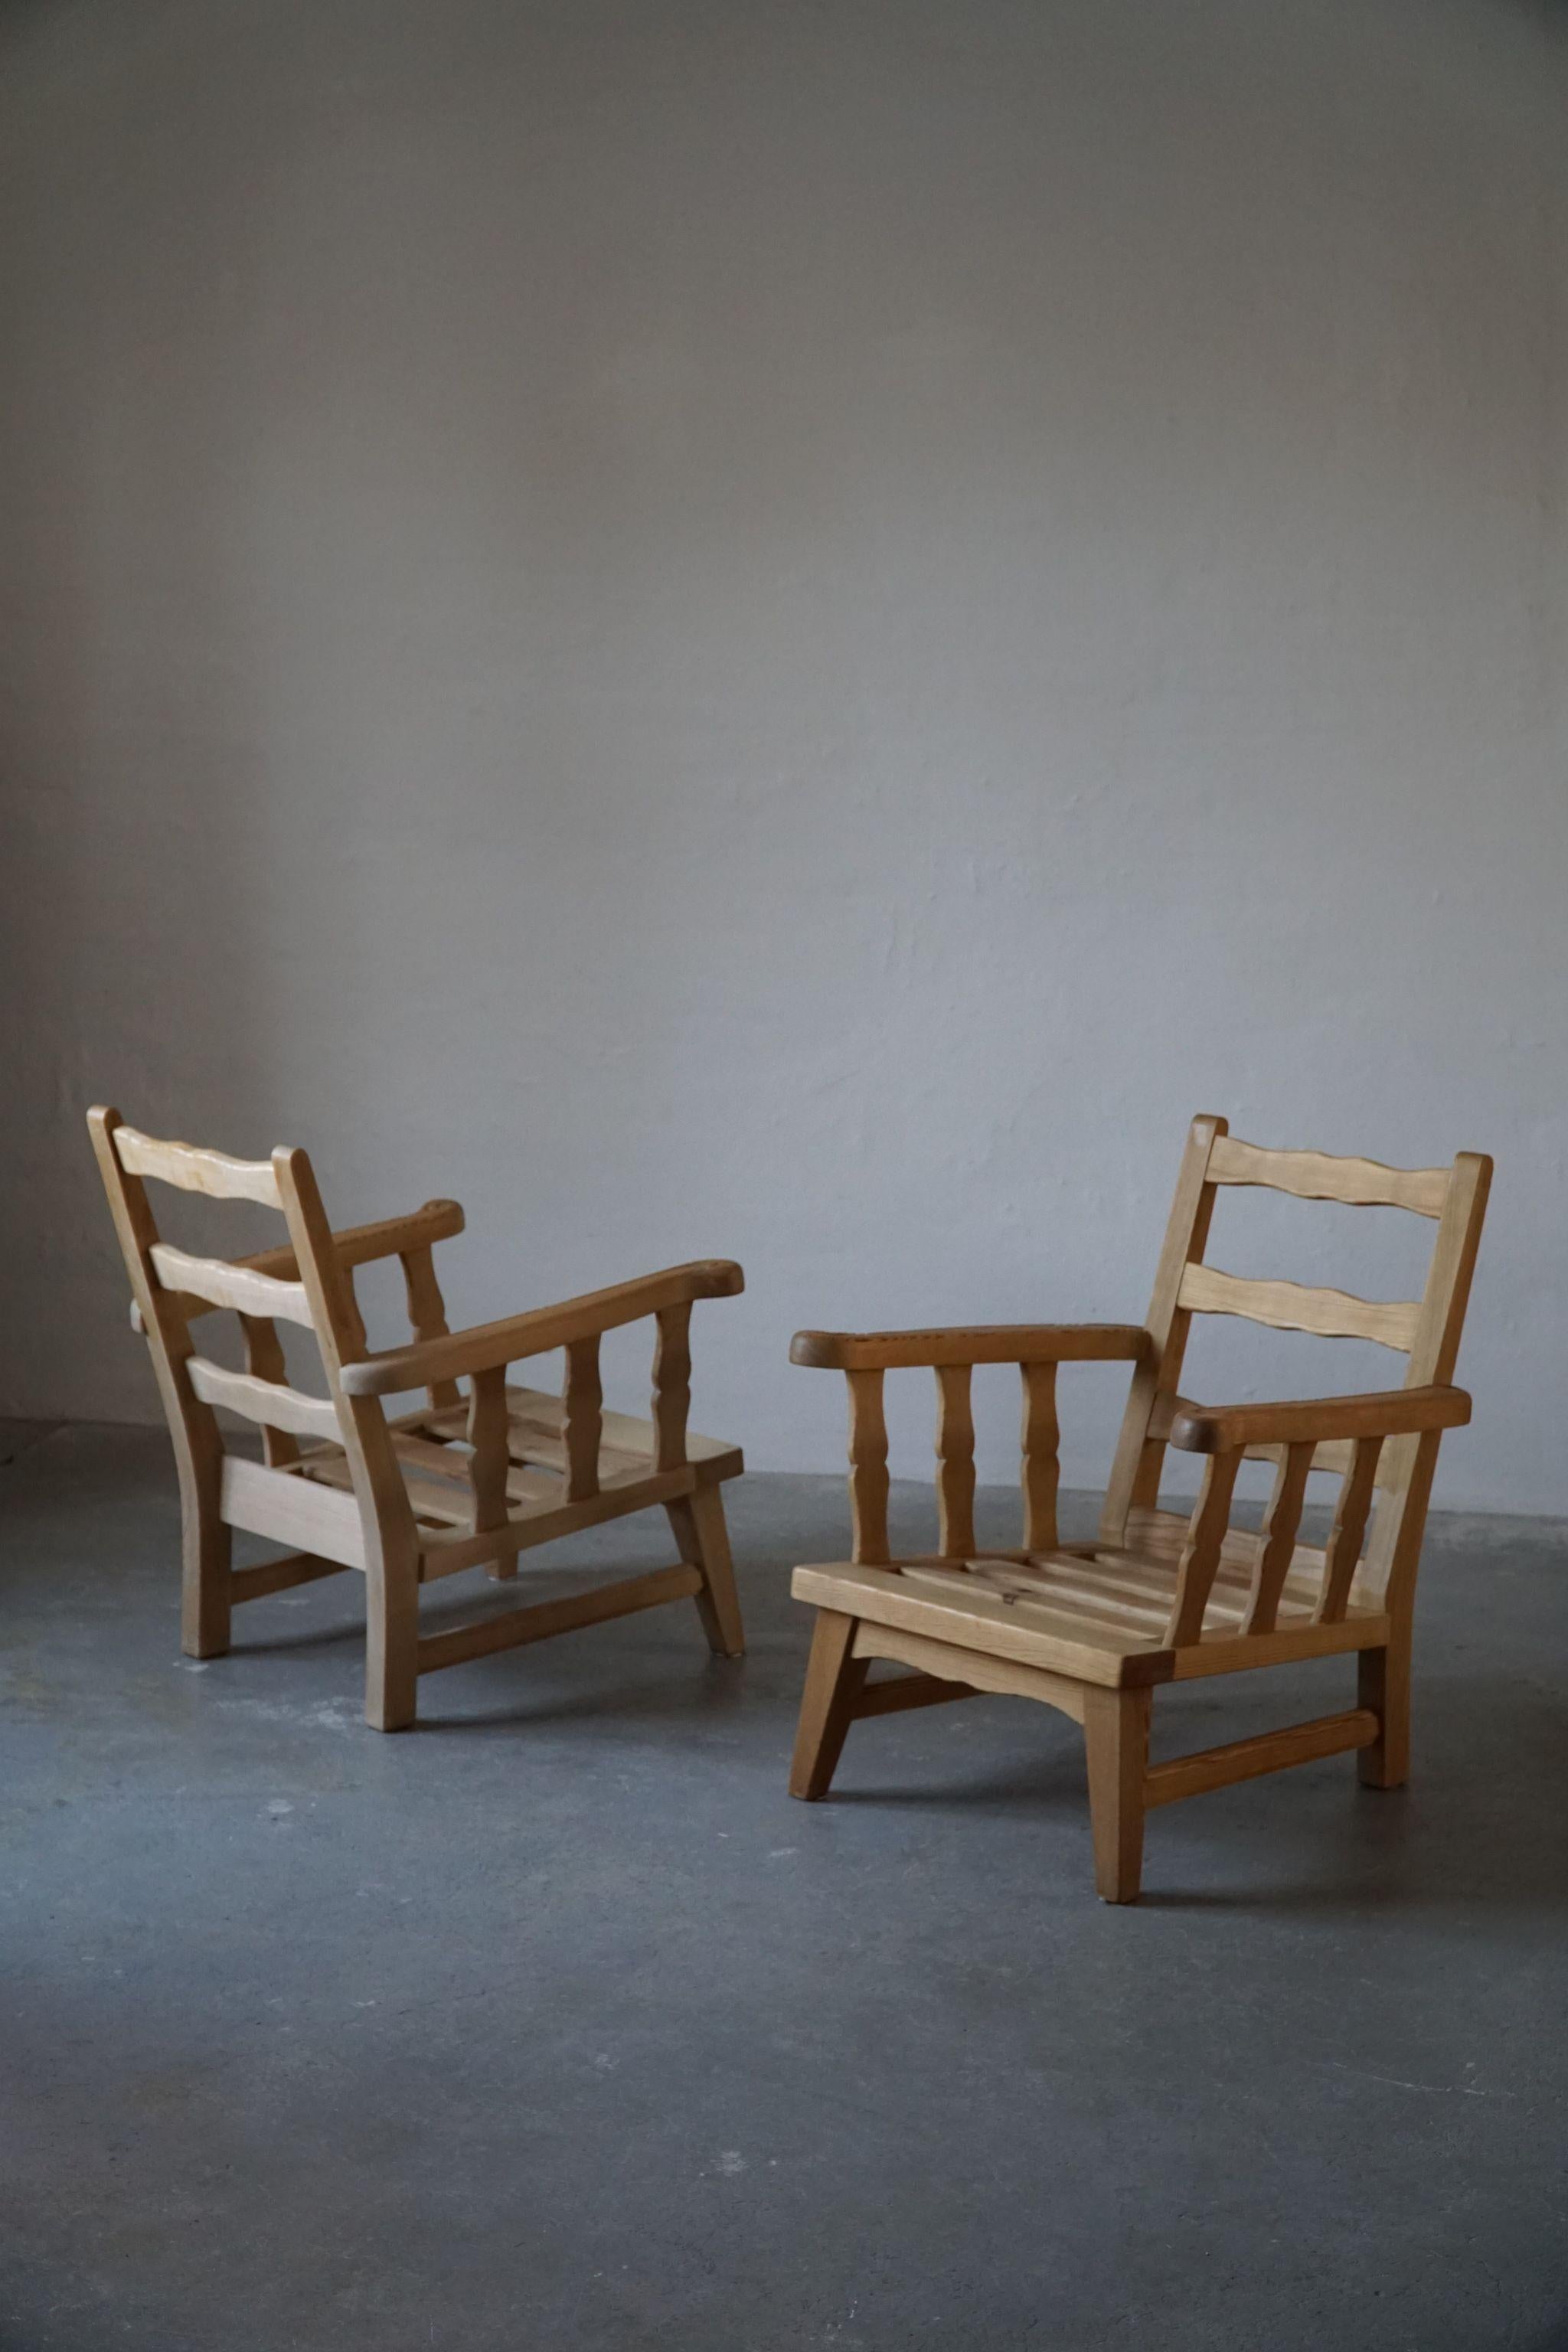 20th Century Norwegian Modern Solid Pine Lounge Chairs by Krogenæs Möbler, 1960s